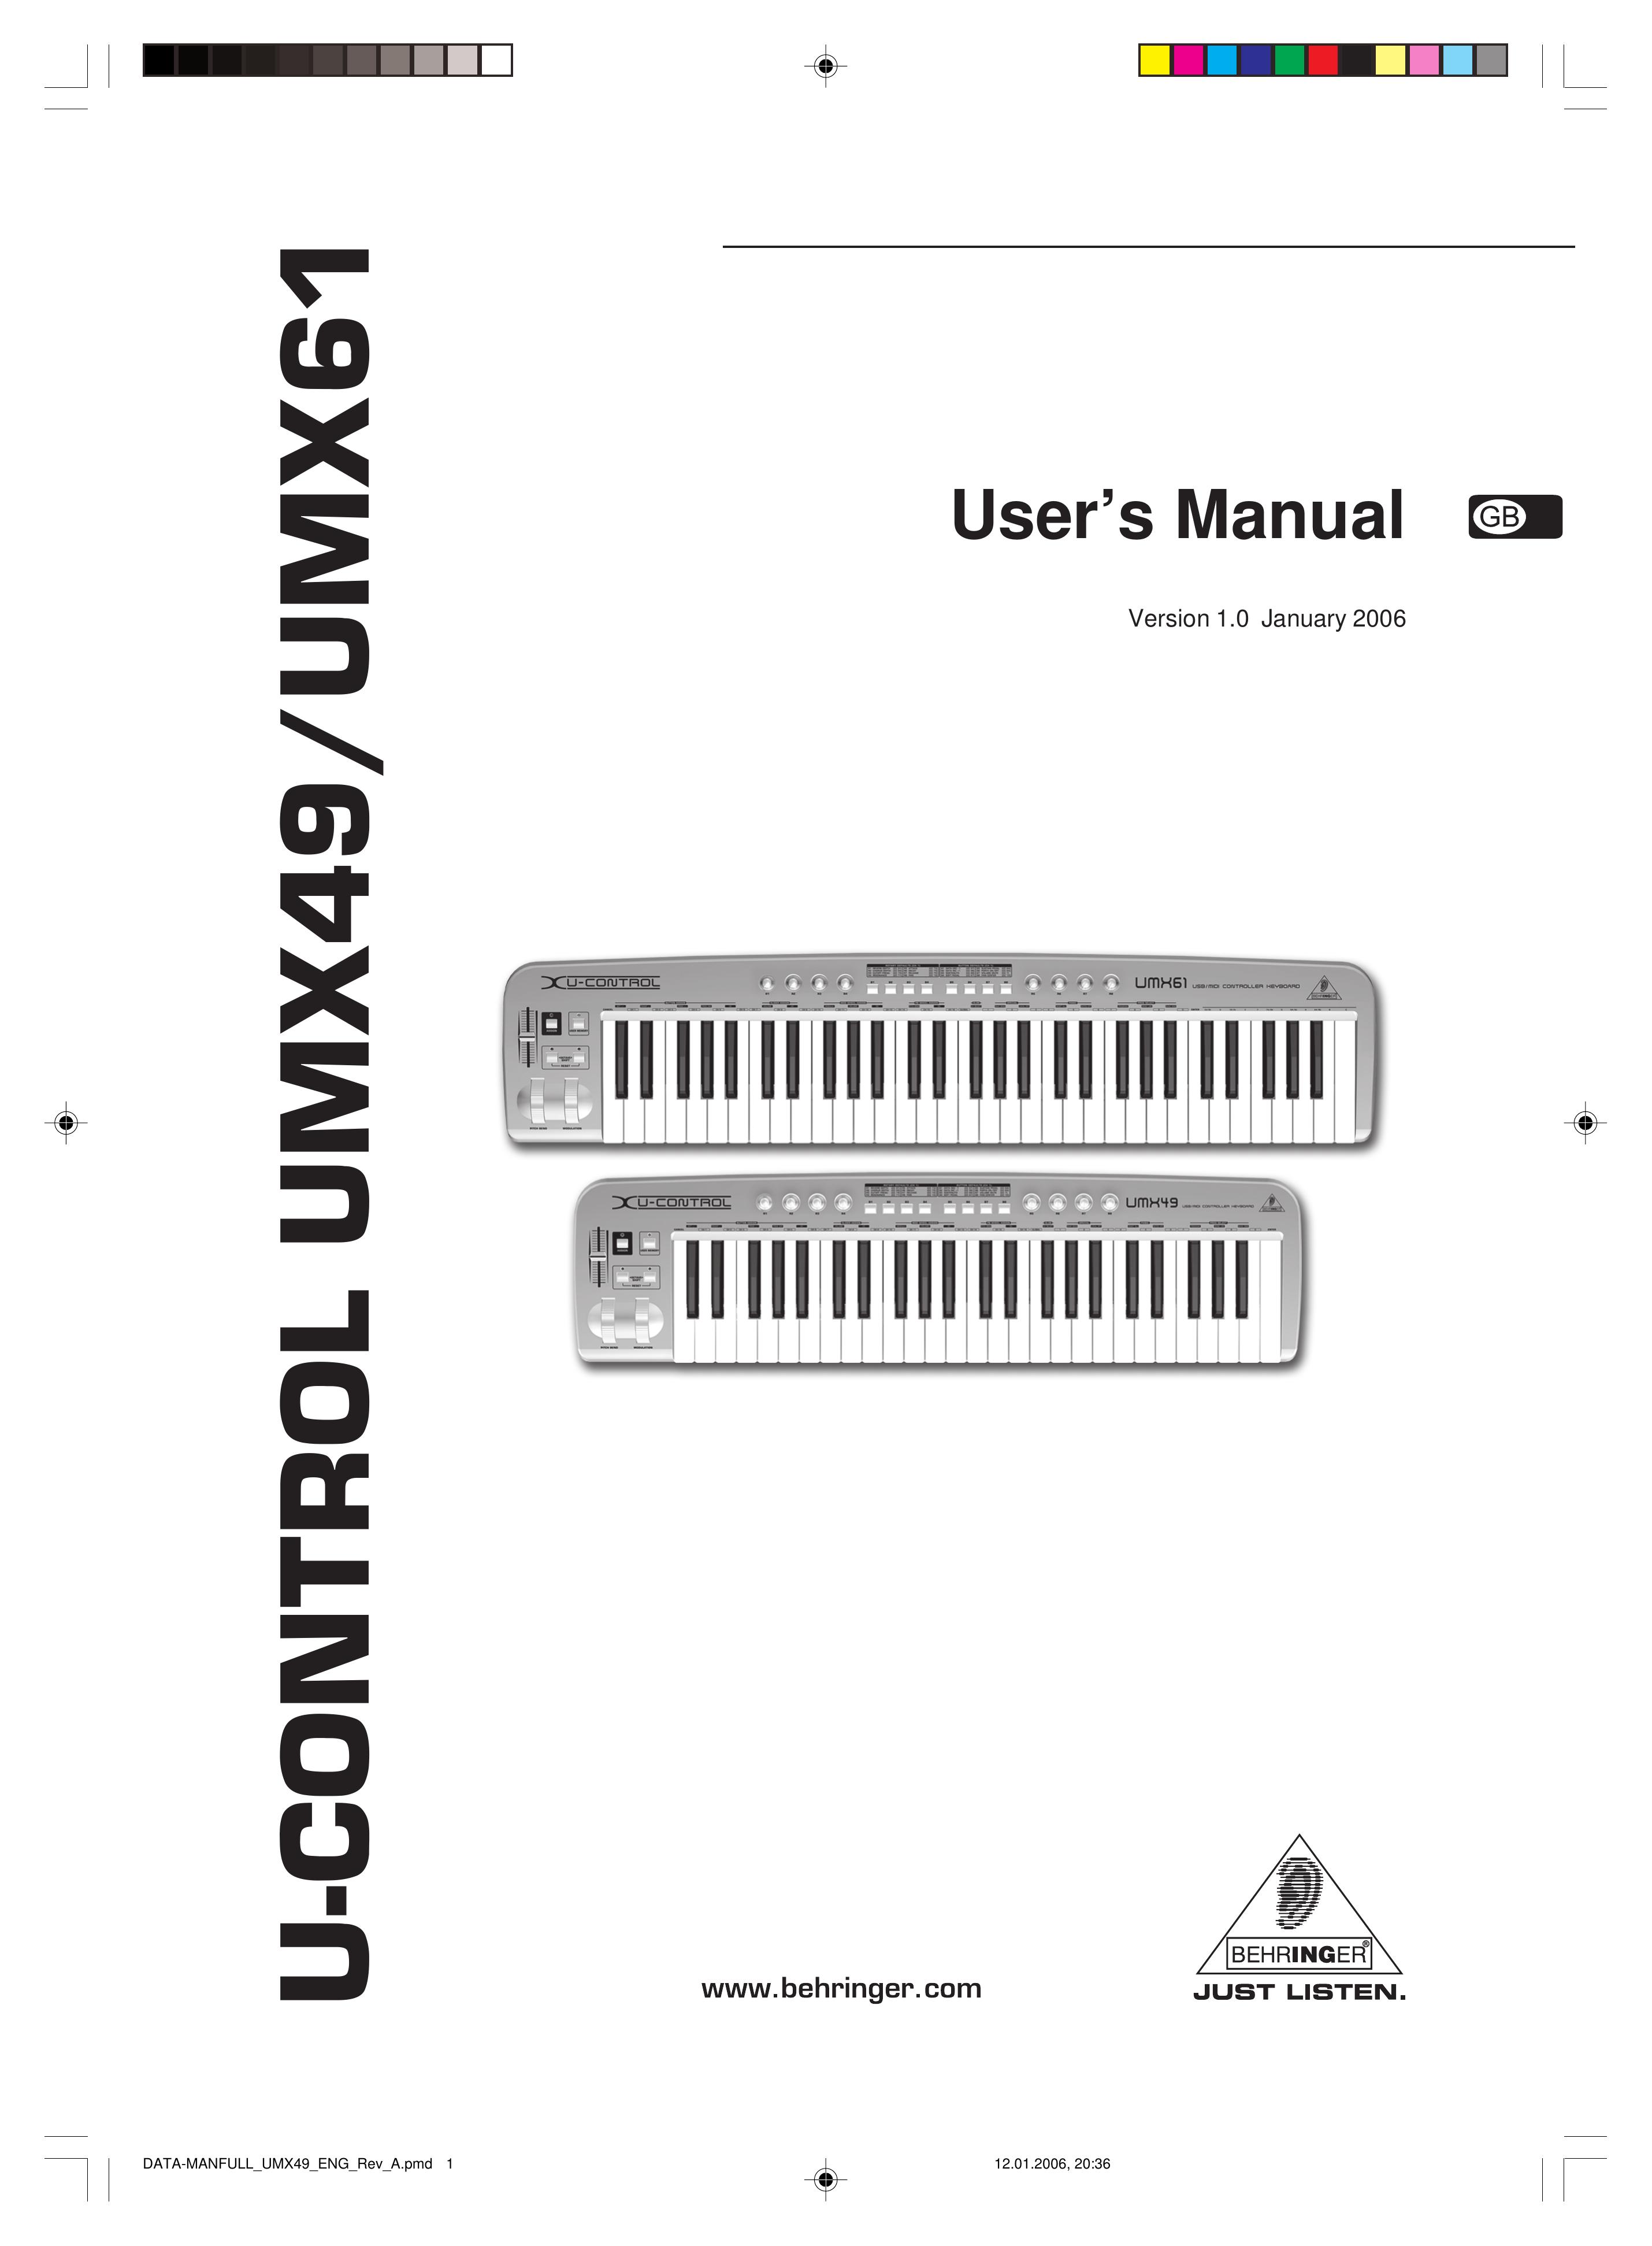 Behringer U-CONTROL UMX49 Electronic Keyboard User Manual (Page 1)